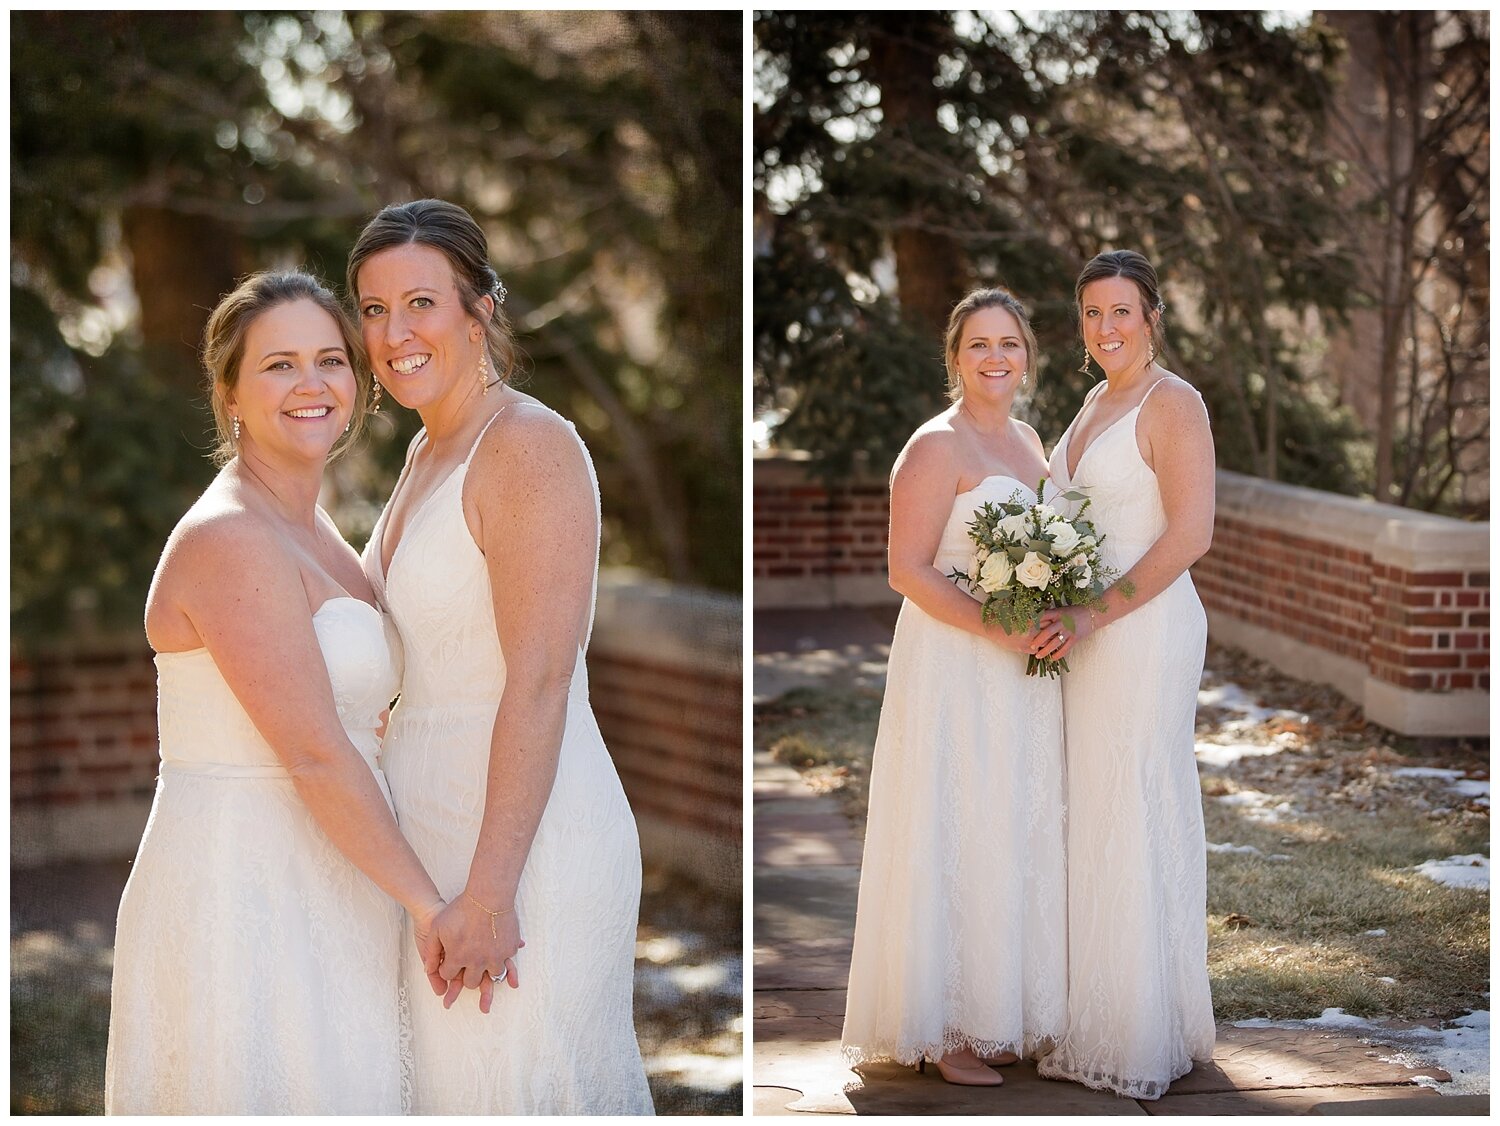 Cindy and Leah's Denver University Wedding Day_0051.jpg